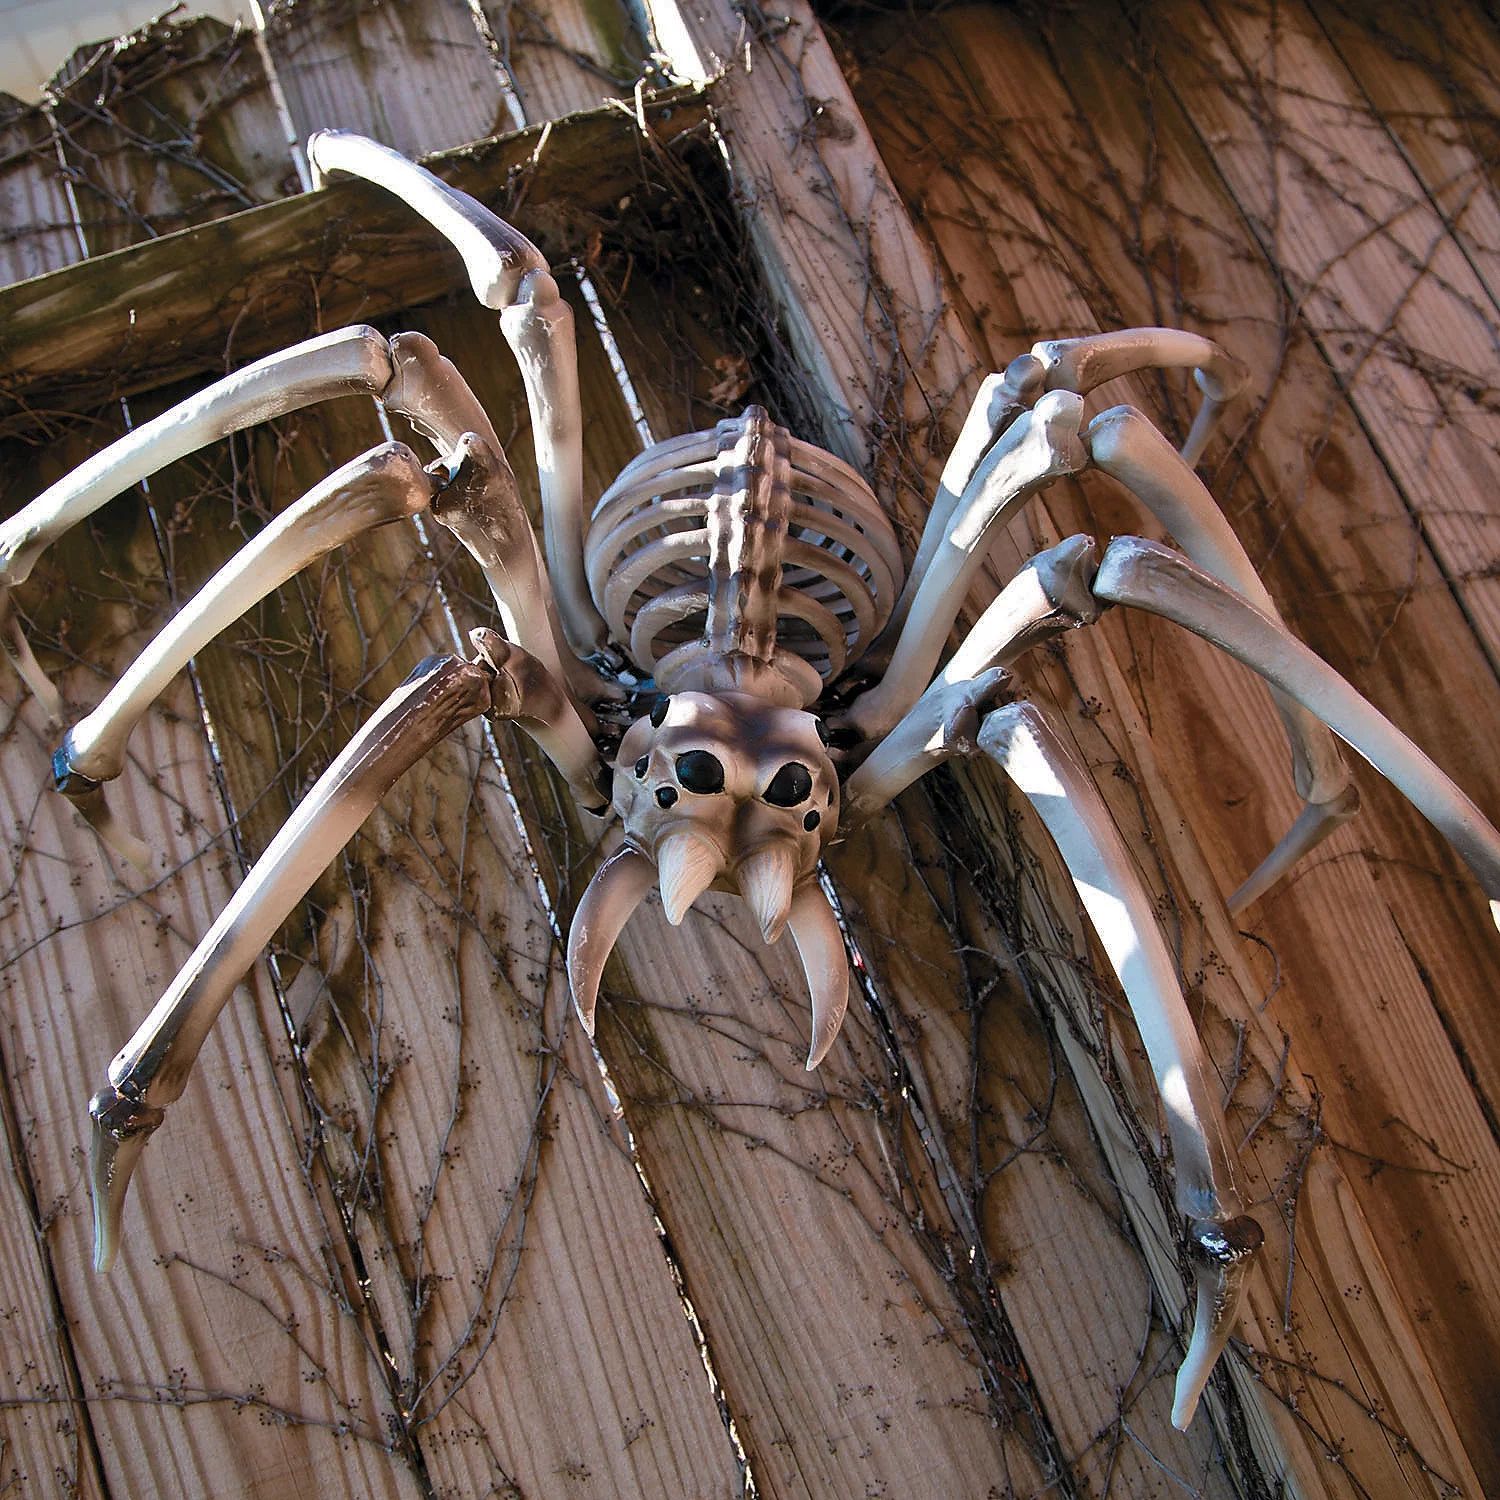 Giant Halloween Skeleton Spider - Home Decor - 1 Piece | Walmart (US)